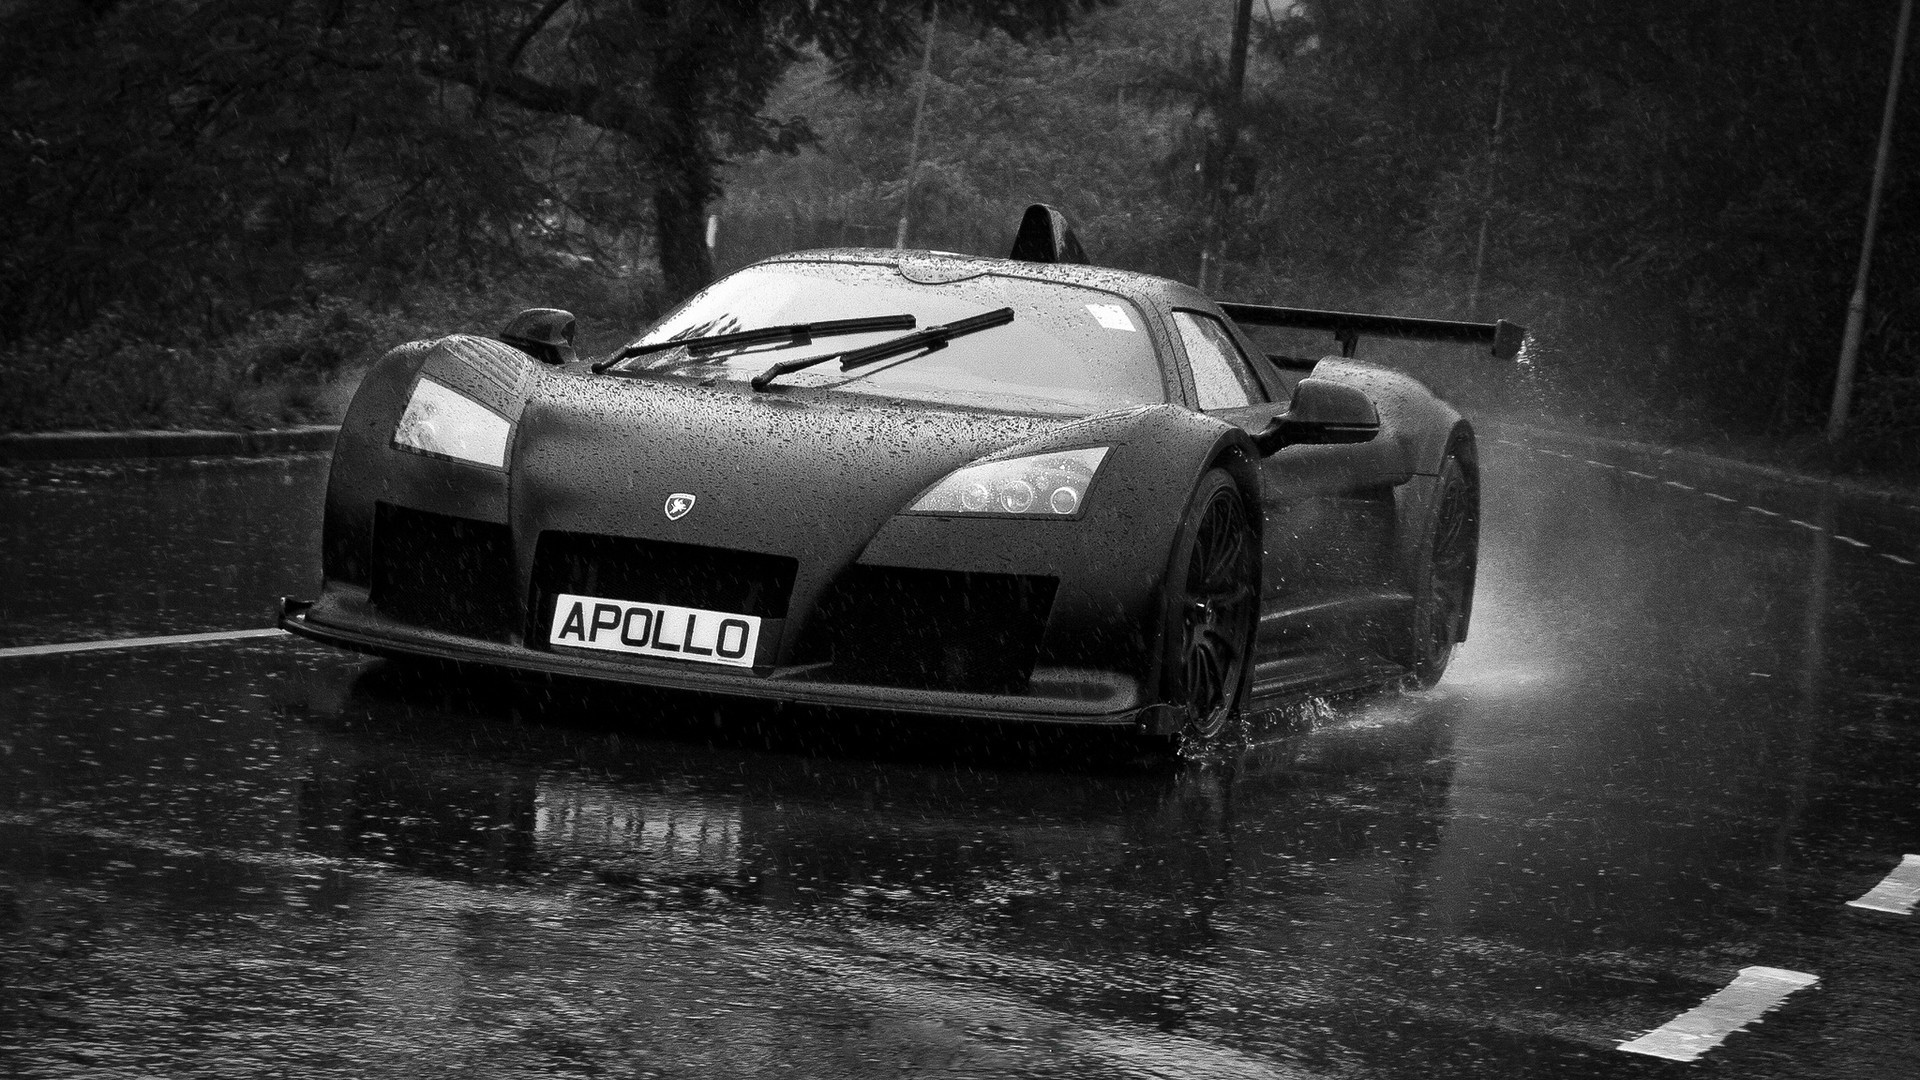 General 1920x1080 Gumpert Apollo car supercars vehicle rain wet street monochrome German cars car spoiler